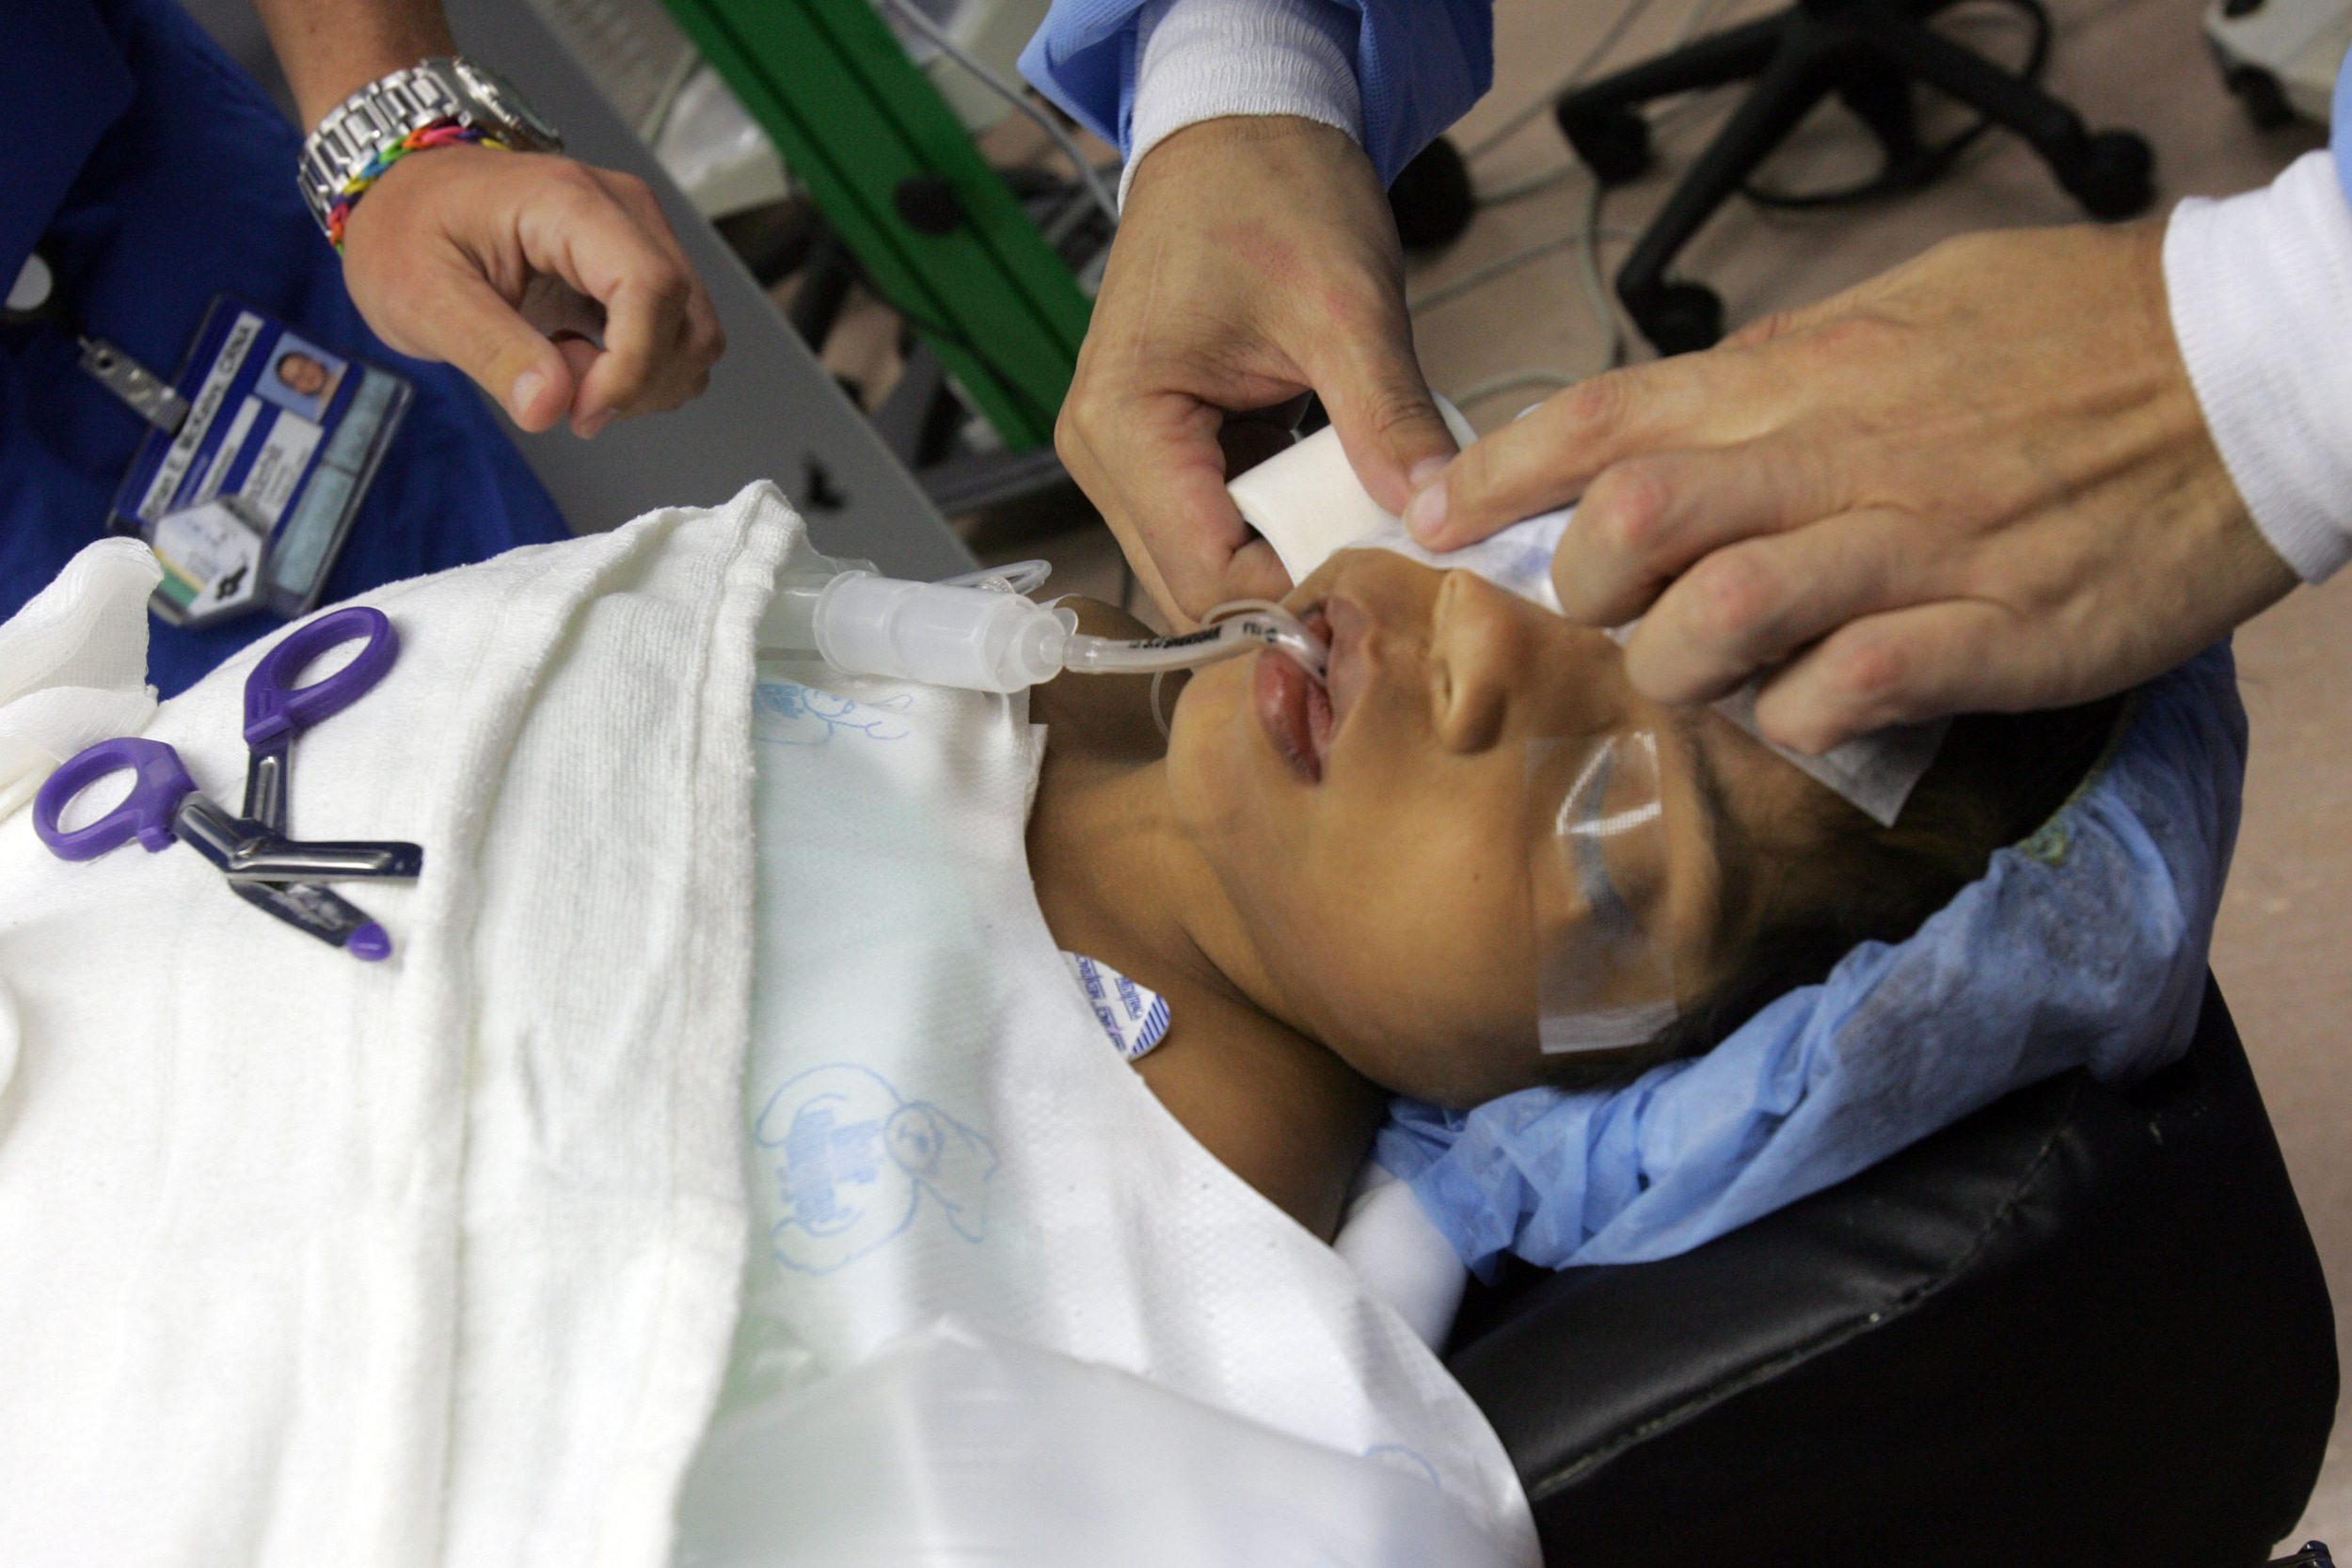  Kajal undergoes eye surgery at HealthSouth Surgery Center Monday, May 14, 2007 in Nashville, Tenn. 